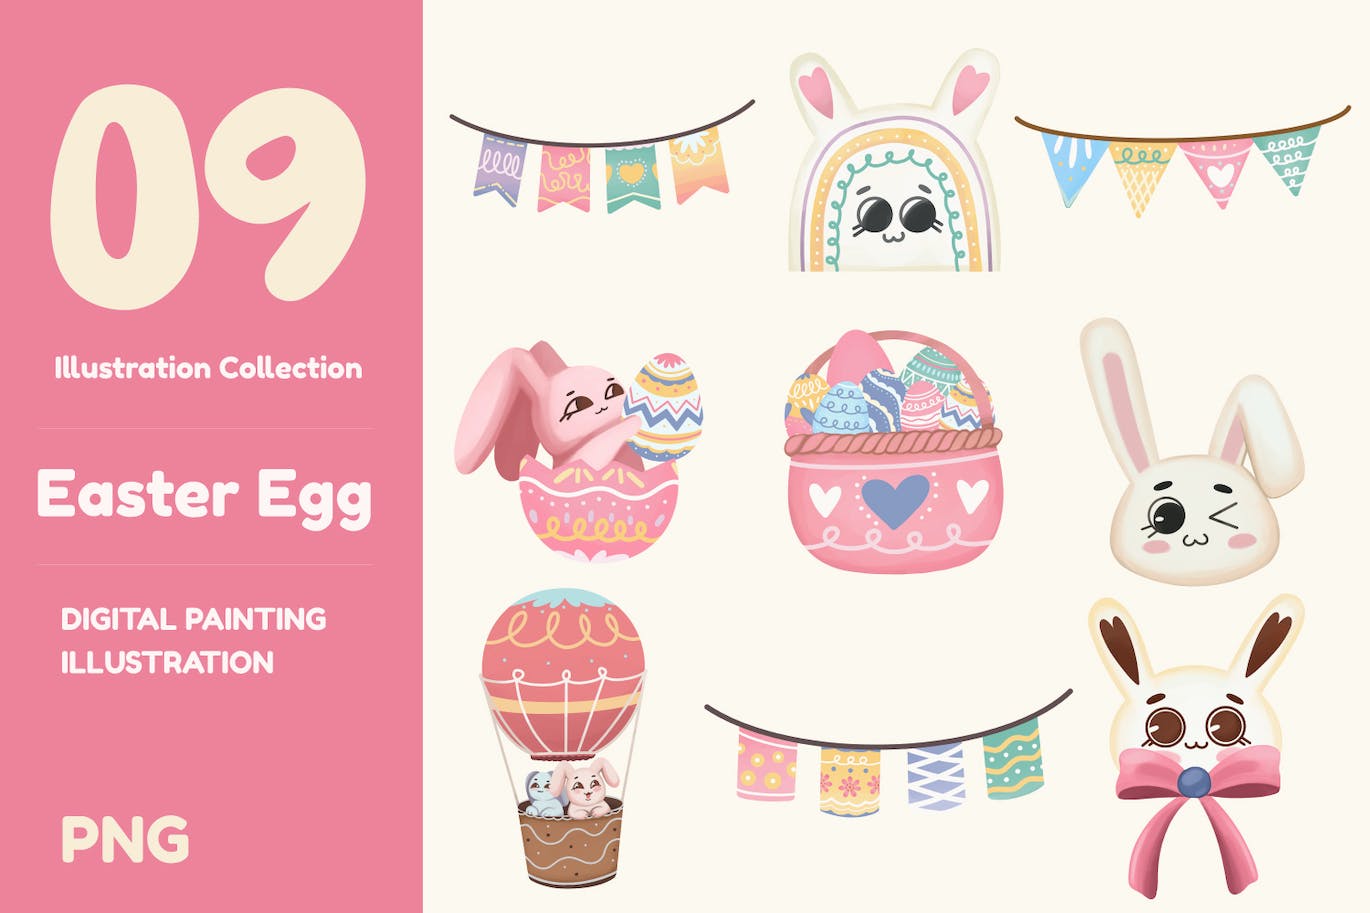 复活节彩蛋矢量插画 Easter Egg Illustration 图片素材 第1张